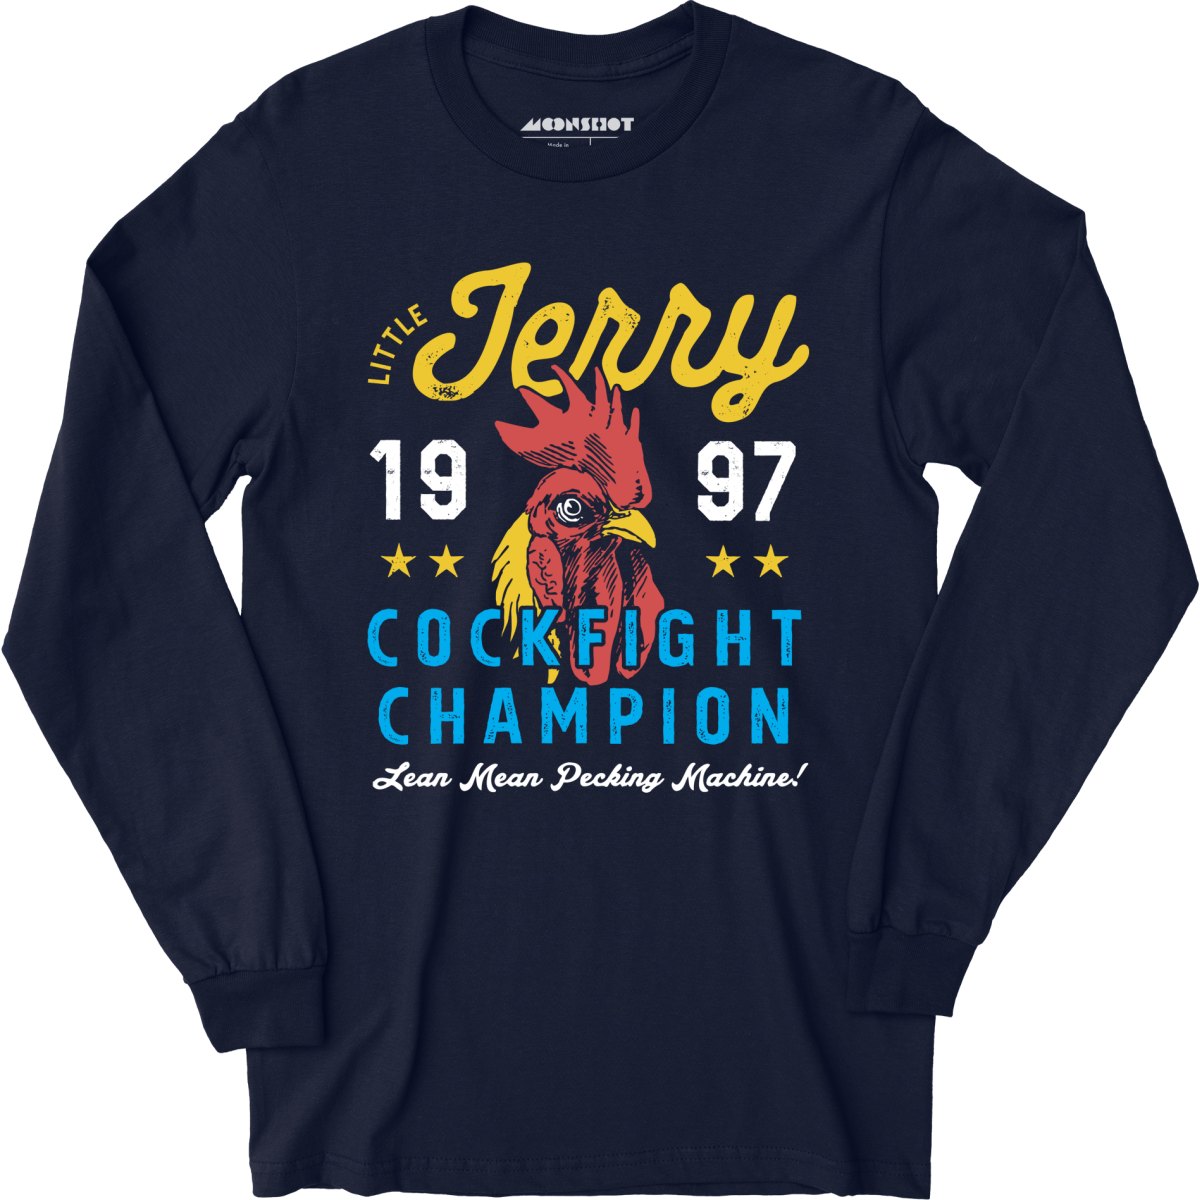 Little Jerry Cockfight Champion - Long Sleeve T-Shirt